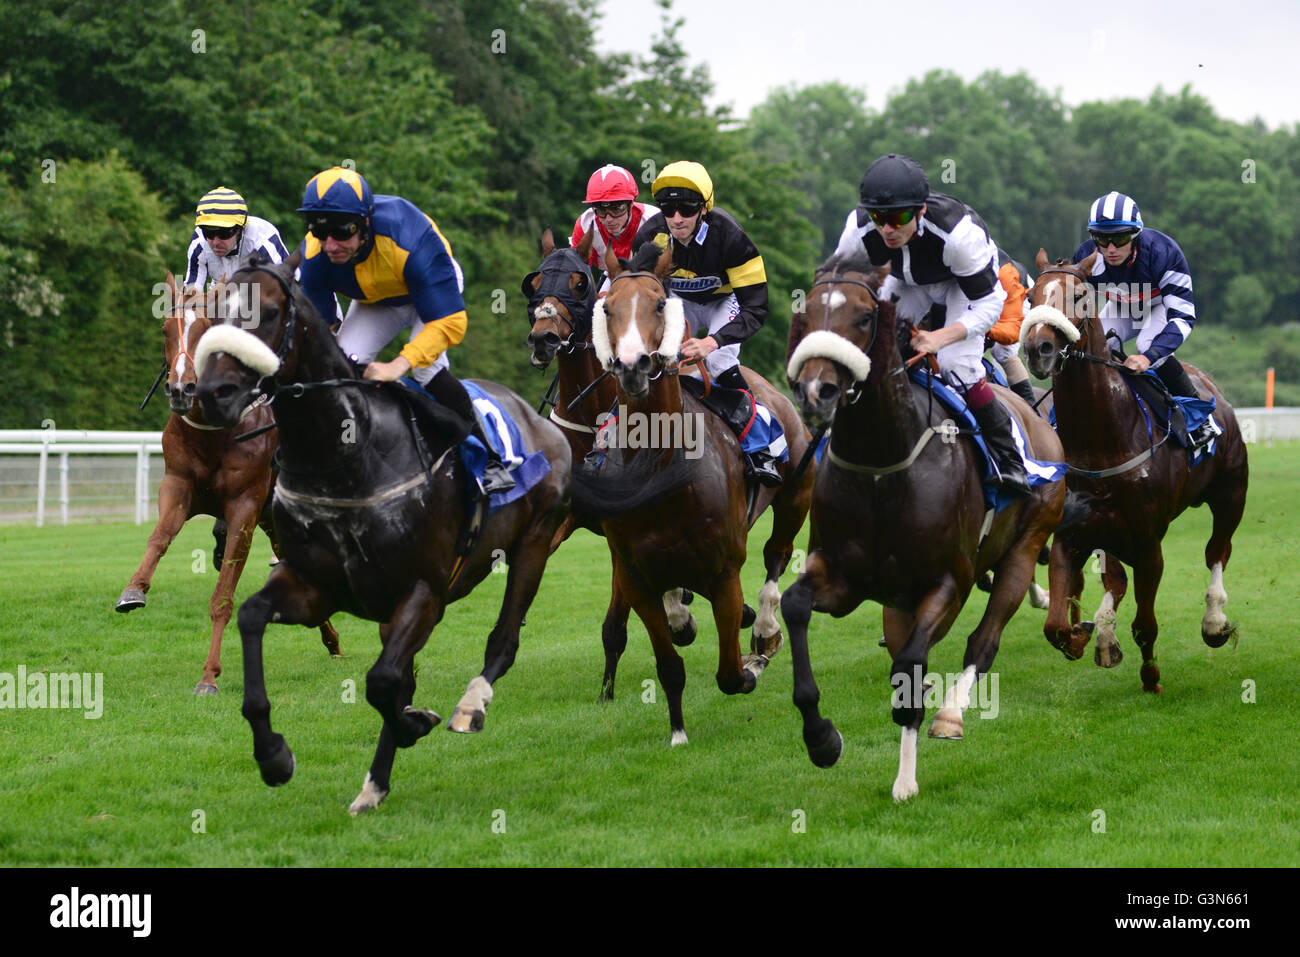 Horse racing at York Racecourse, North Yorkshire, UK. Stock Photo